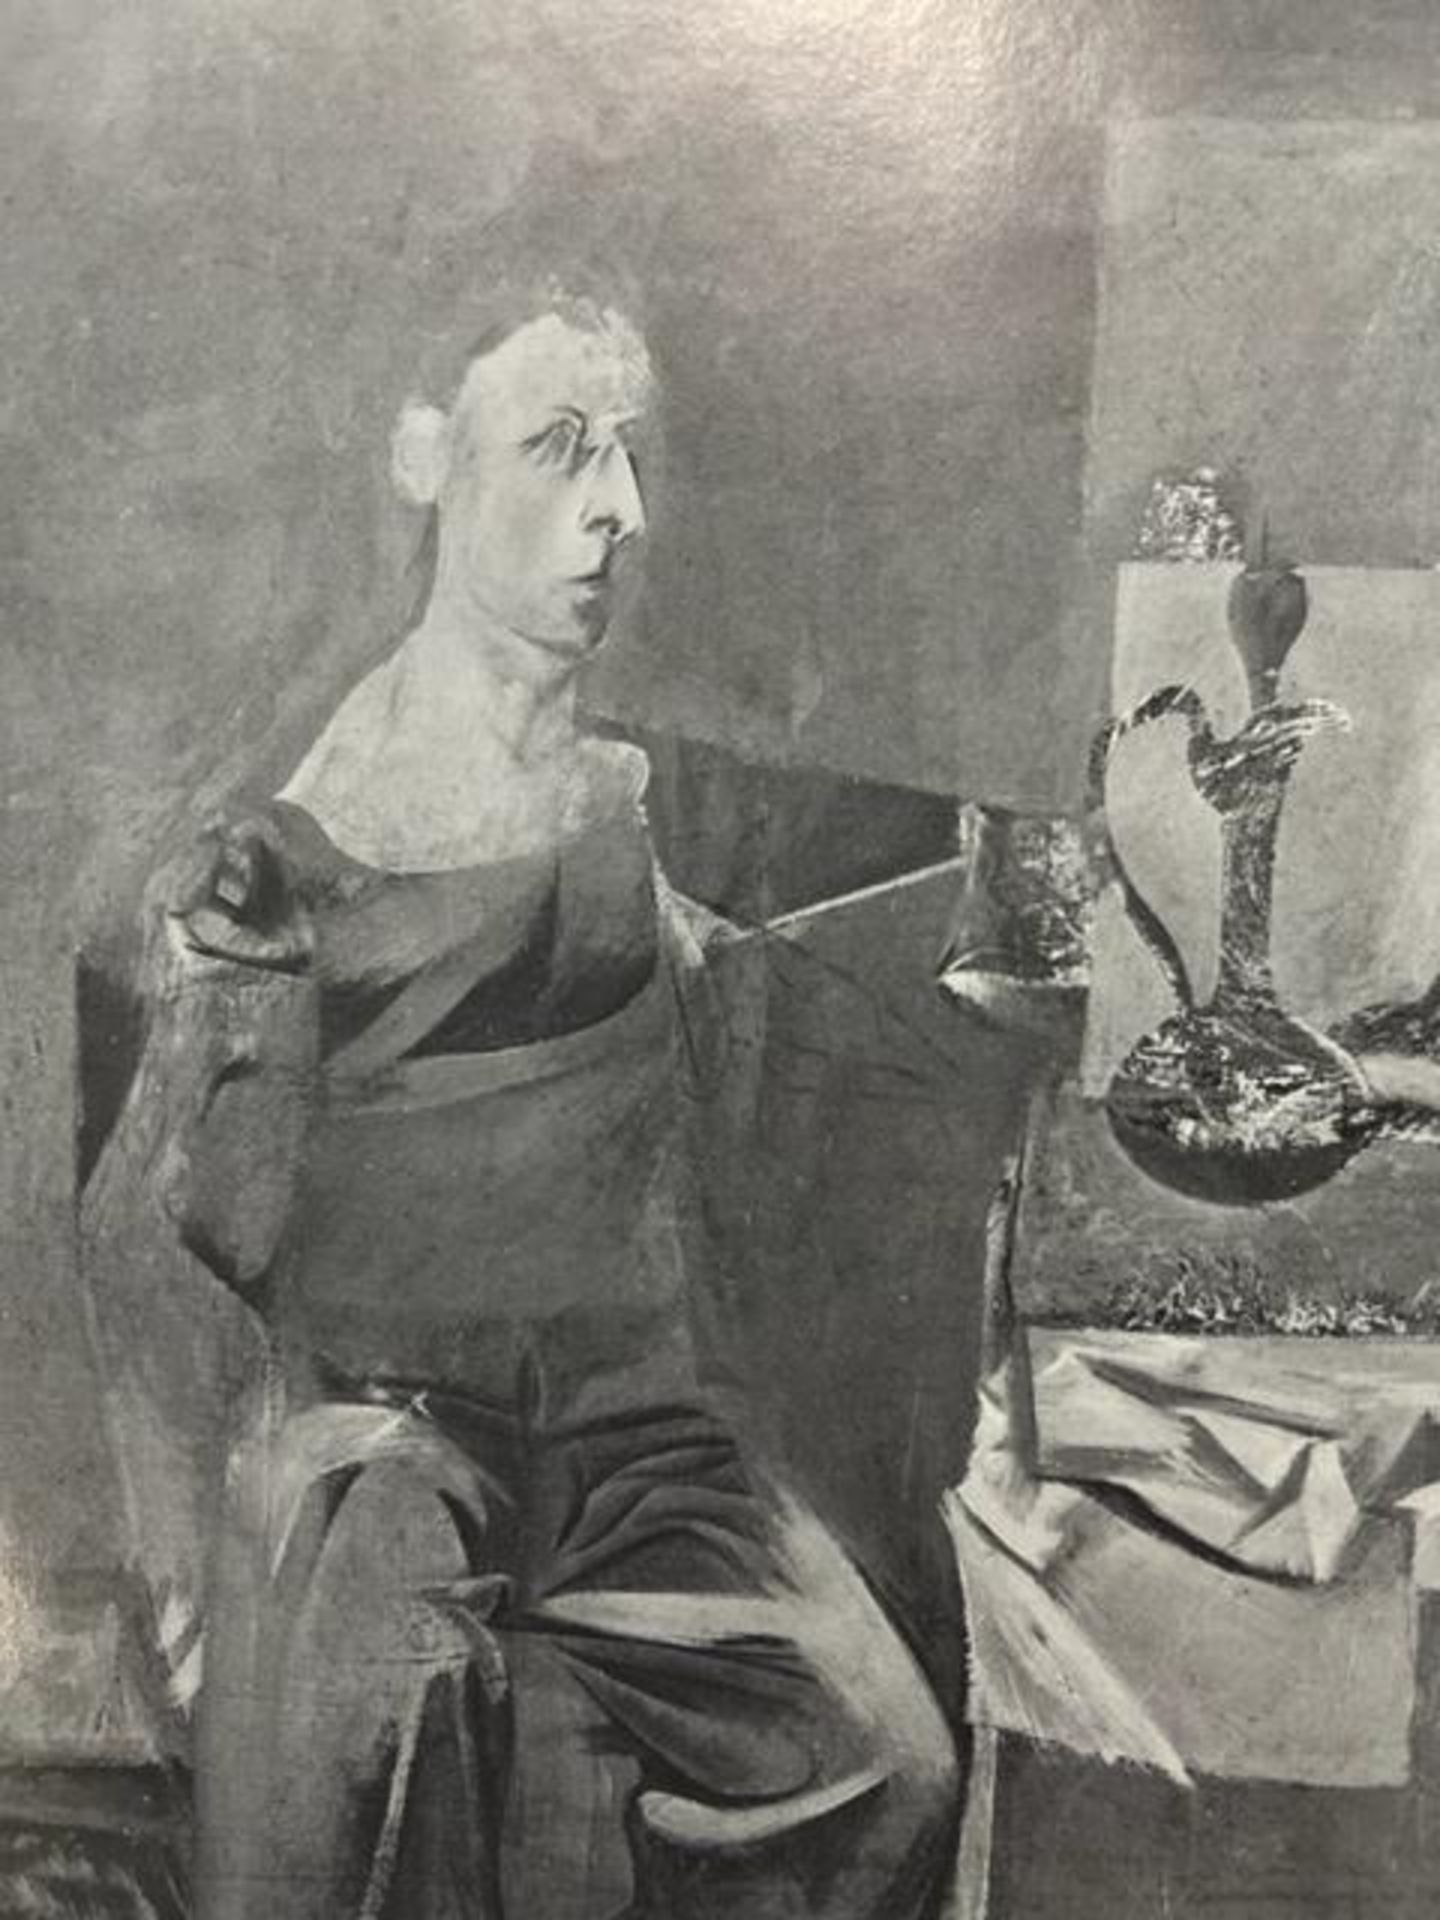 Willem de Kooning "Glazier" Print. - Image 4 of 6